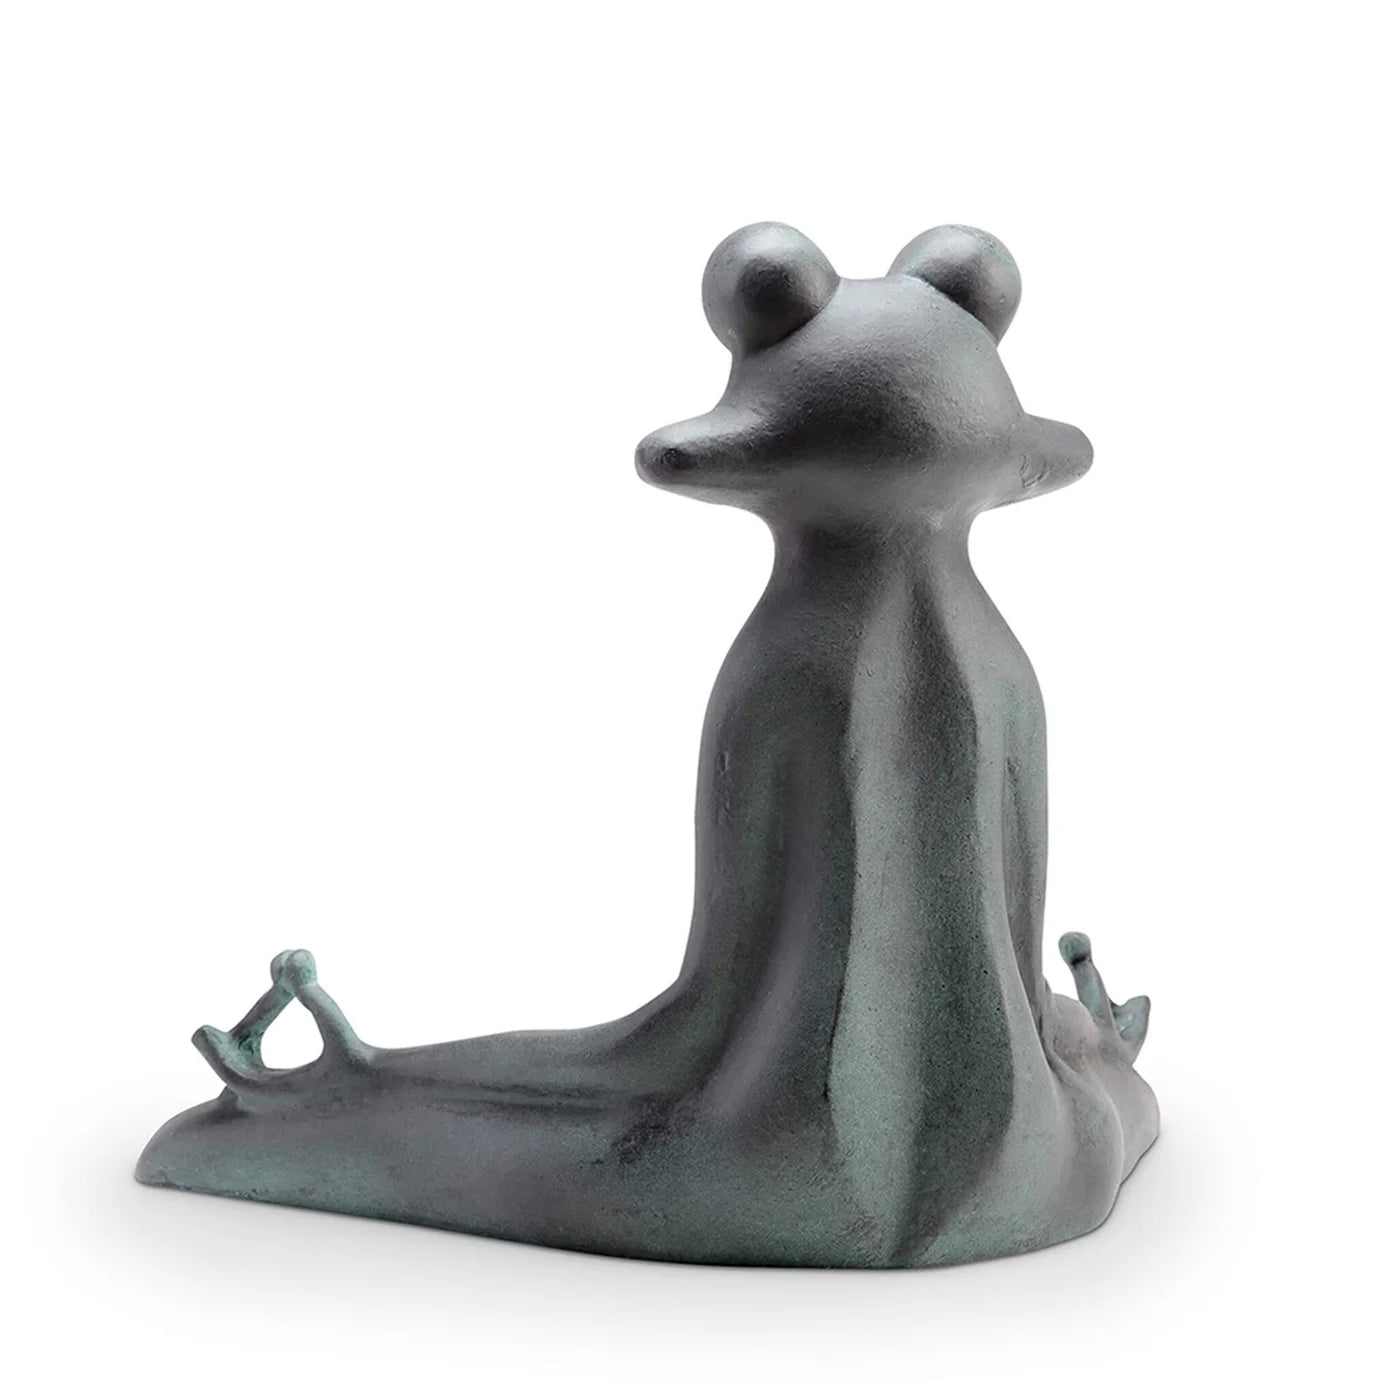 Contented Yoga Frog Garden Sculpture